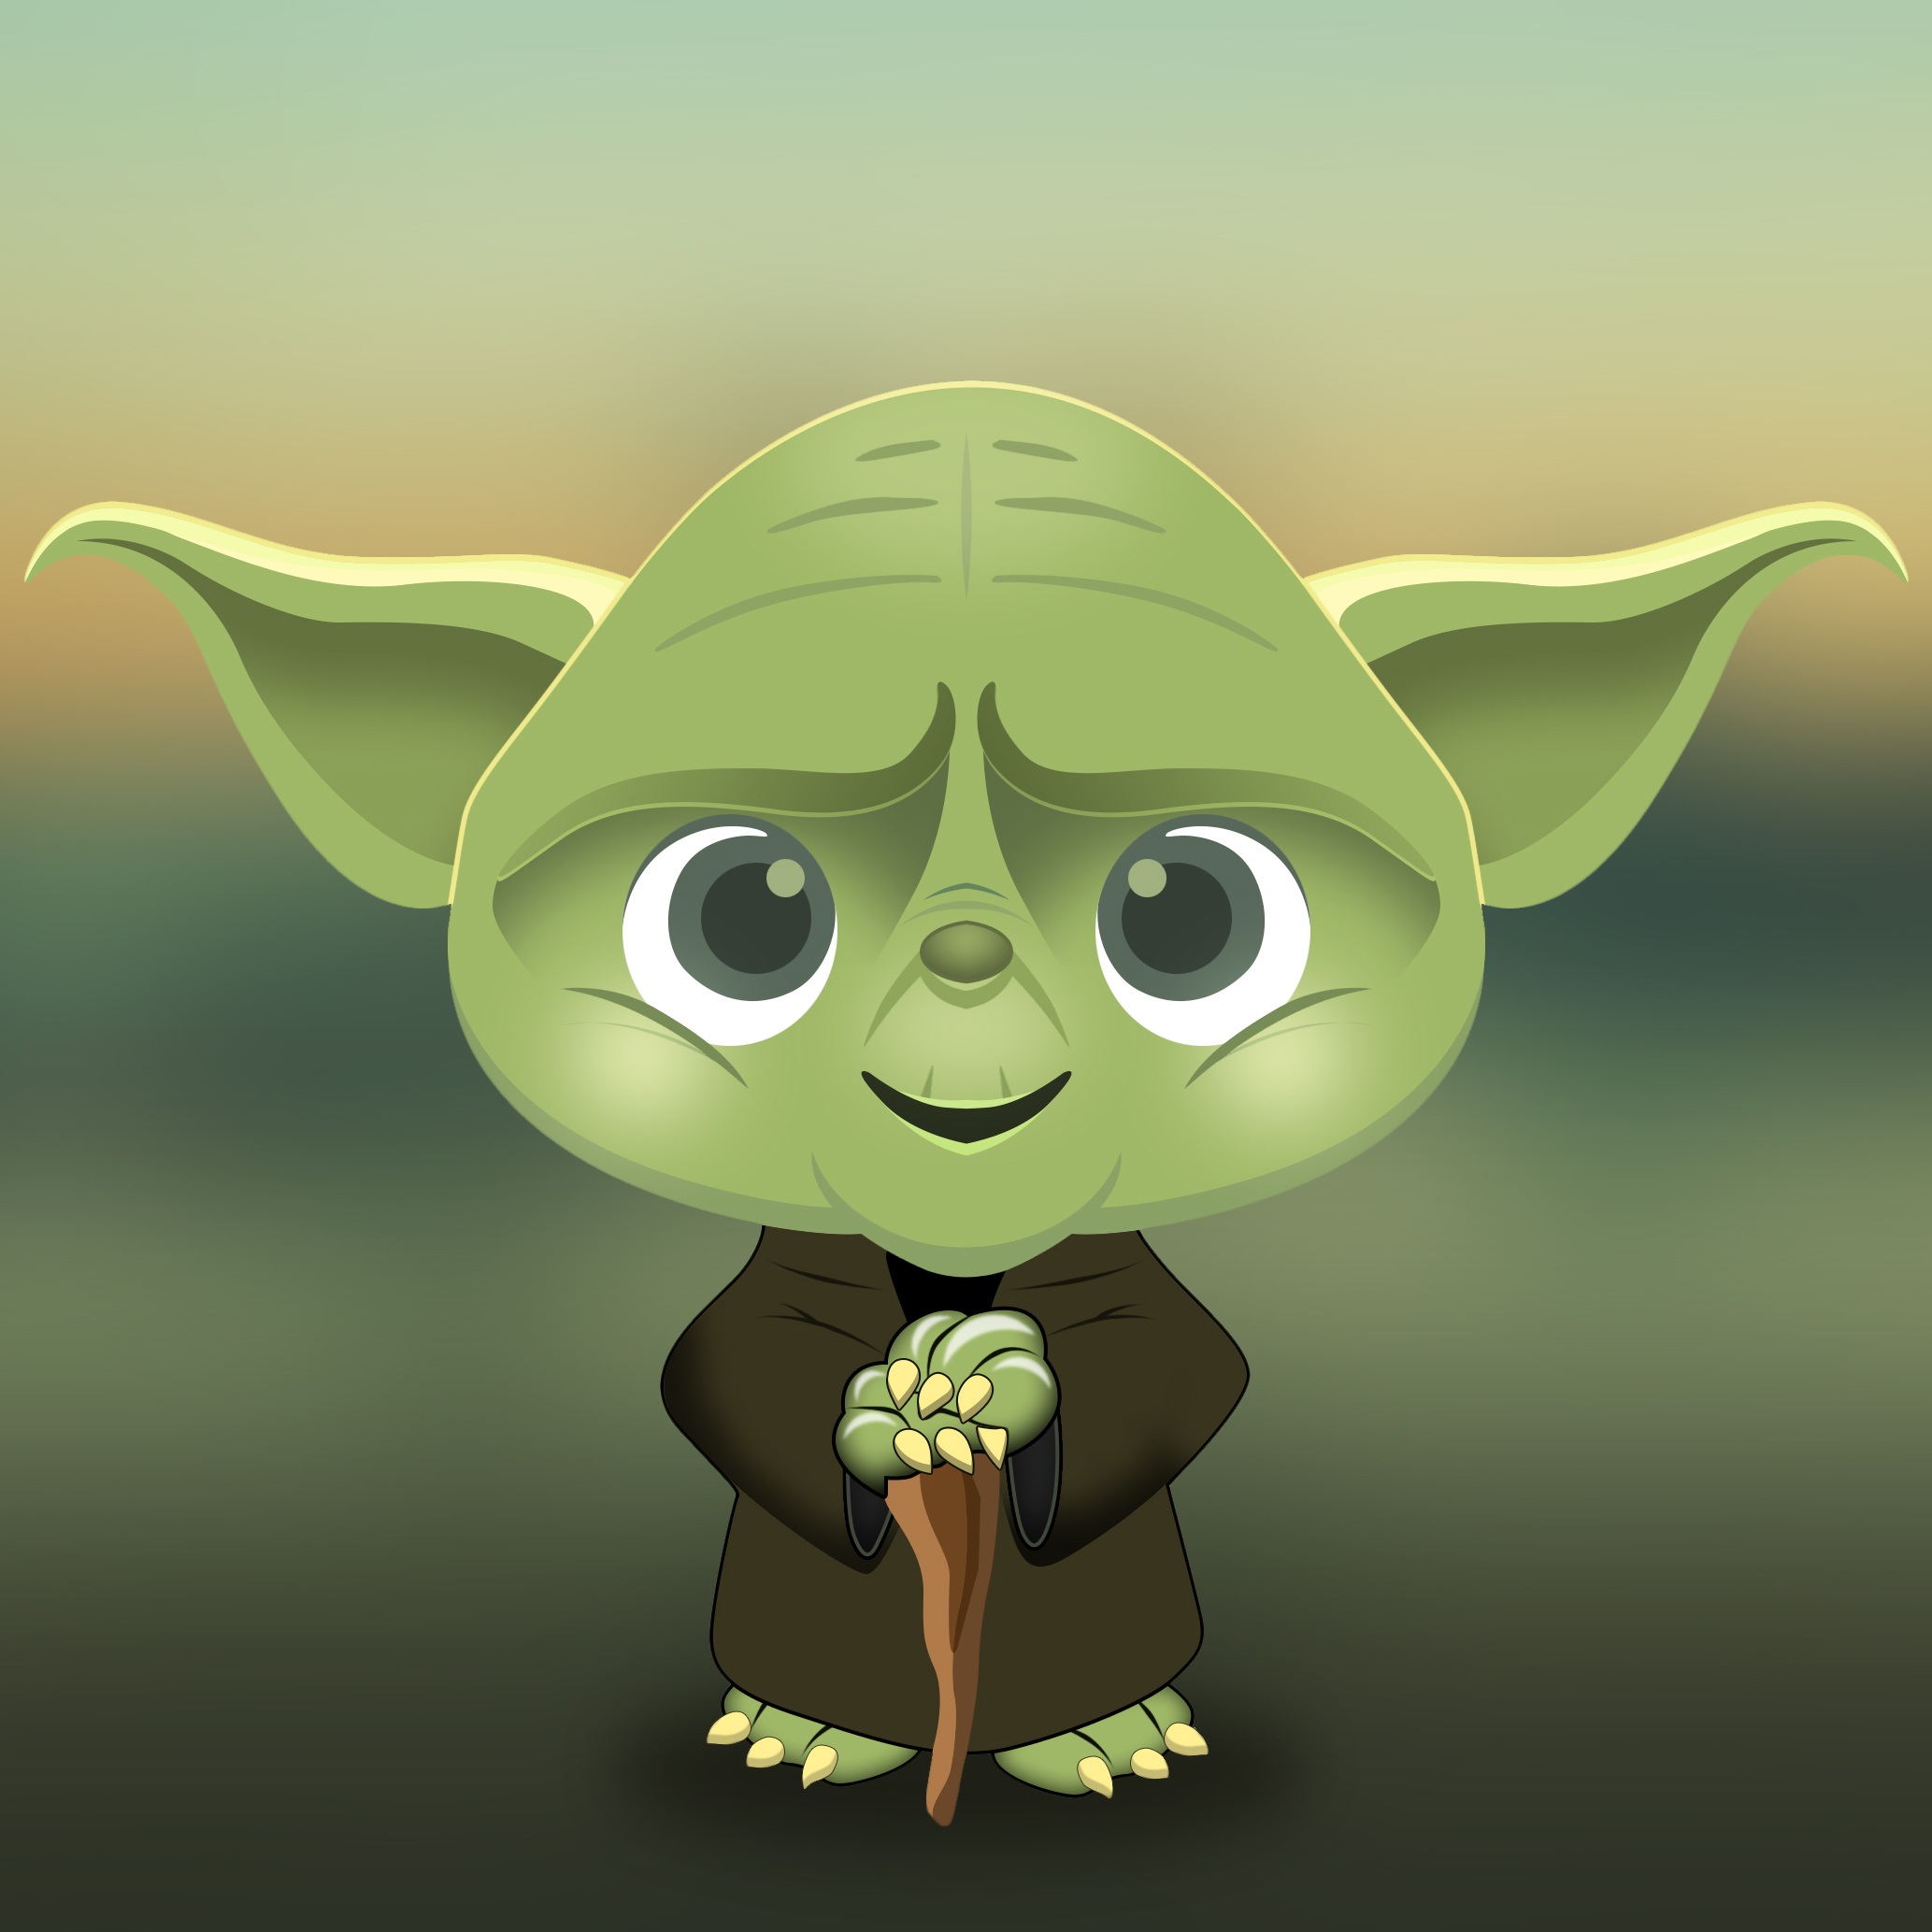 Master Yoda by Jonny Lindner